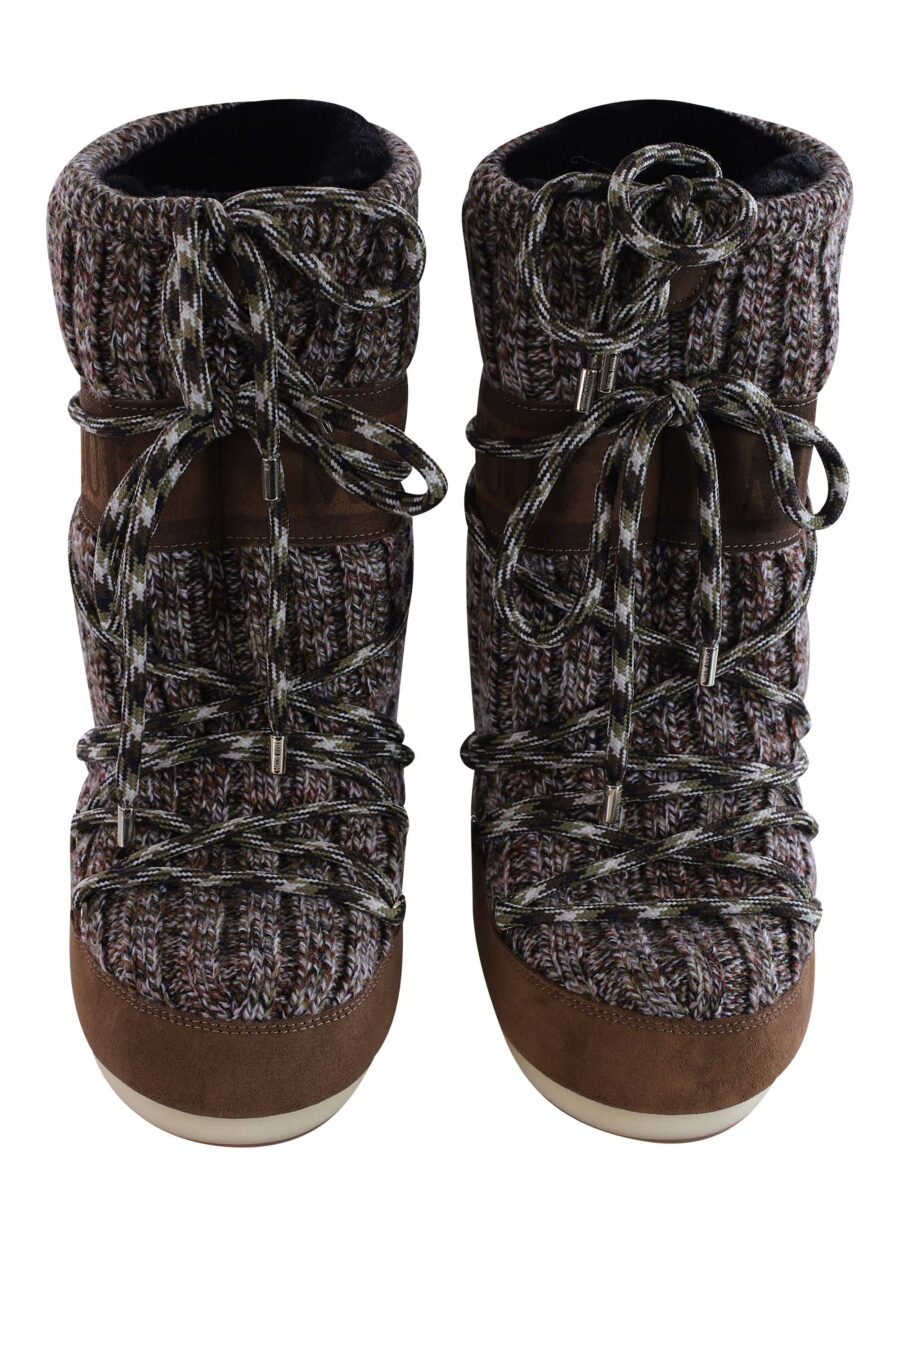 Botas marrón de nieve con detalles en lana - IMG 2975